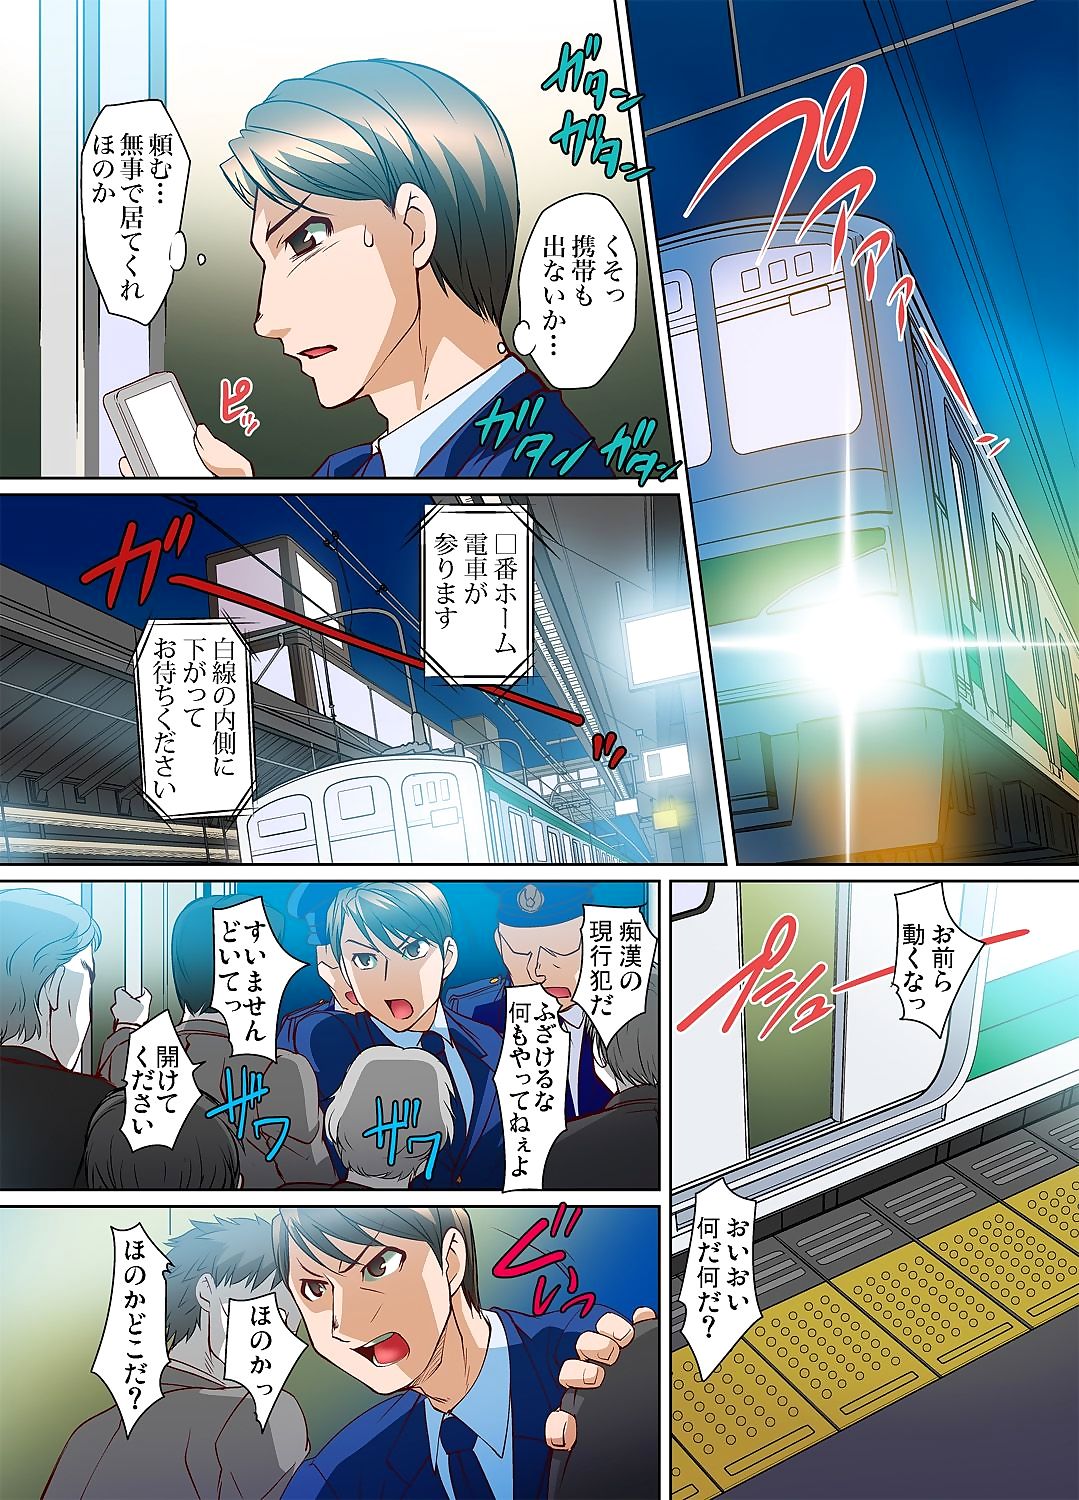 Mitchaku JK Train ~Hajimete no Zetchou 10-11 - part 2